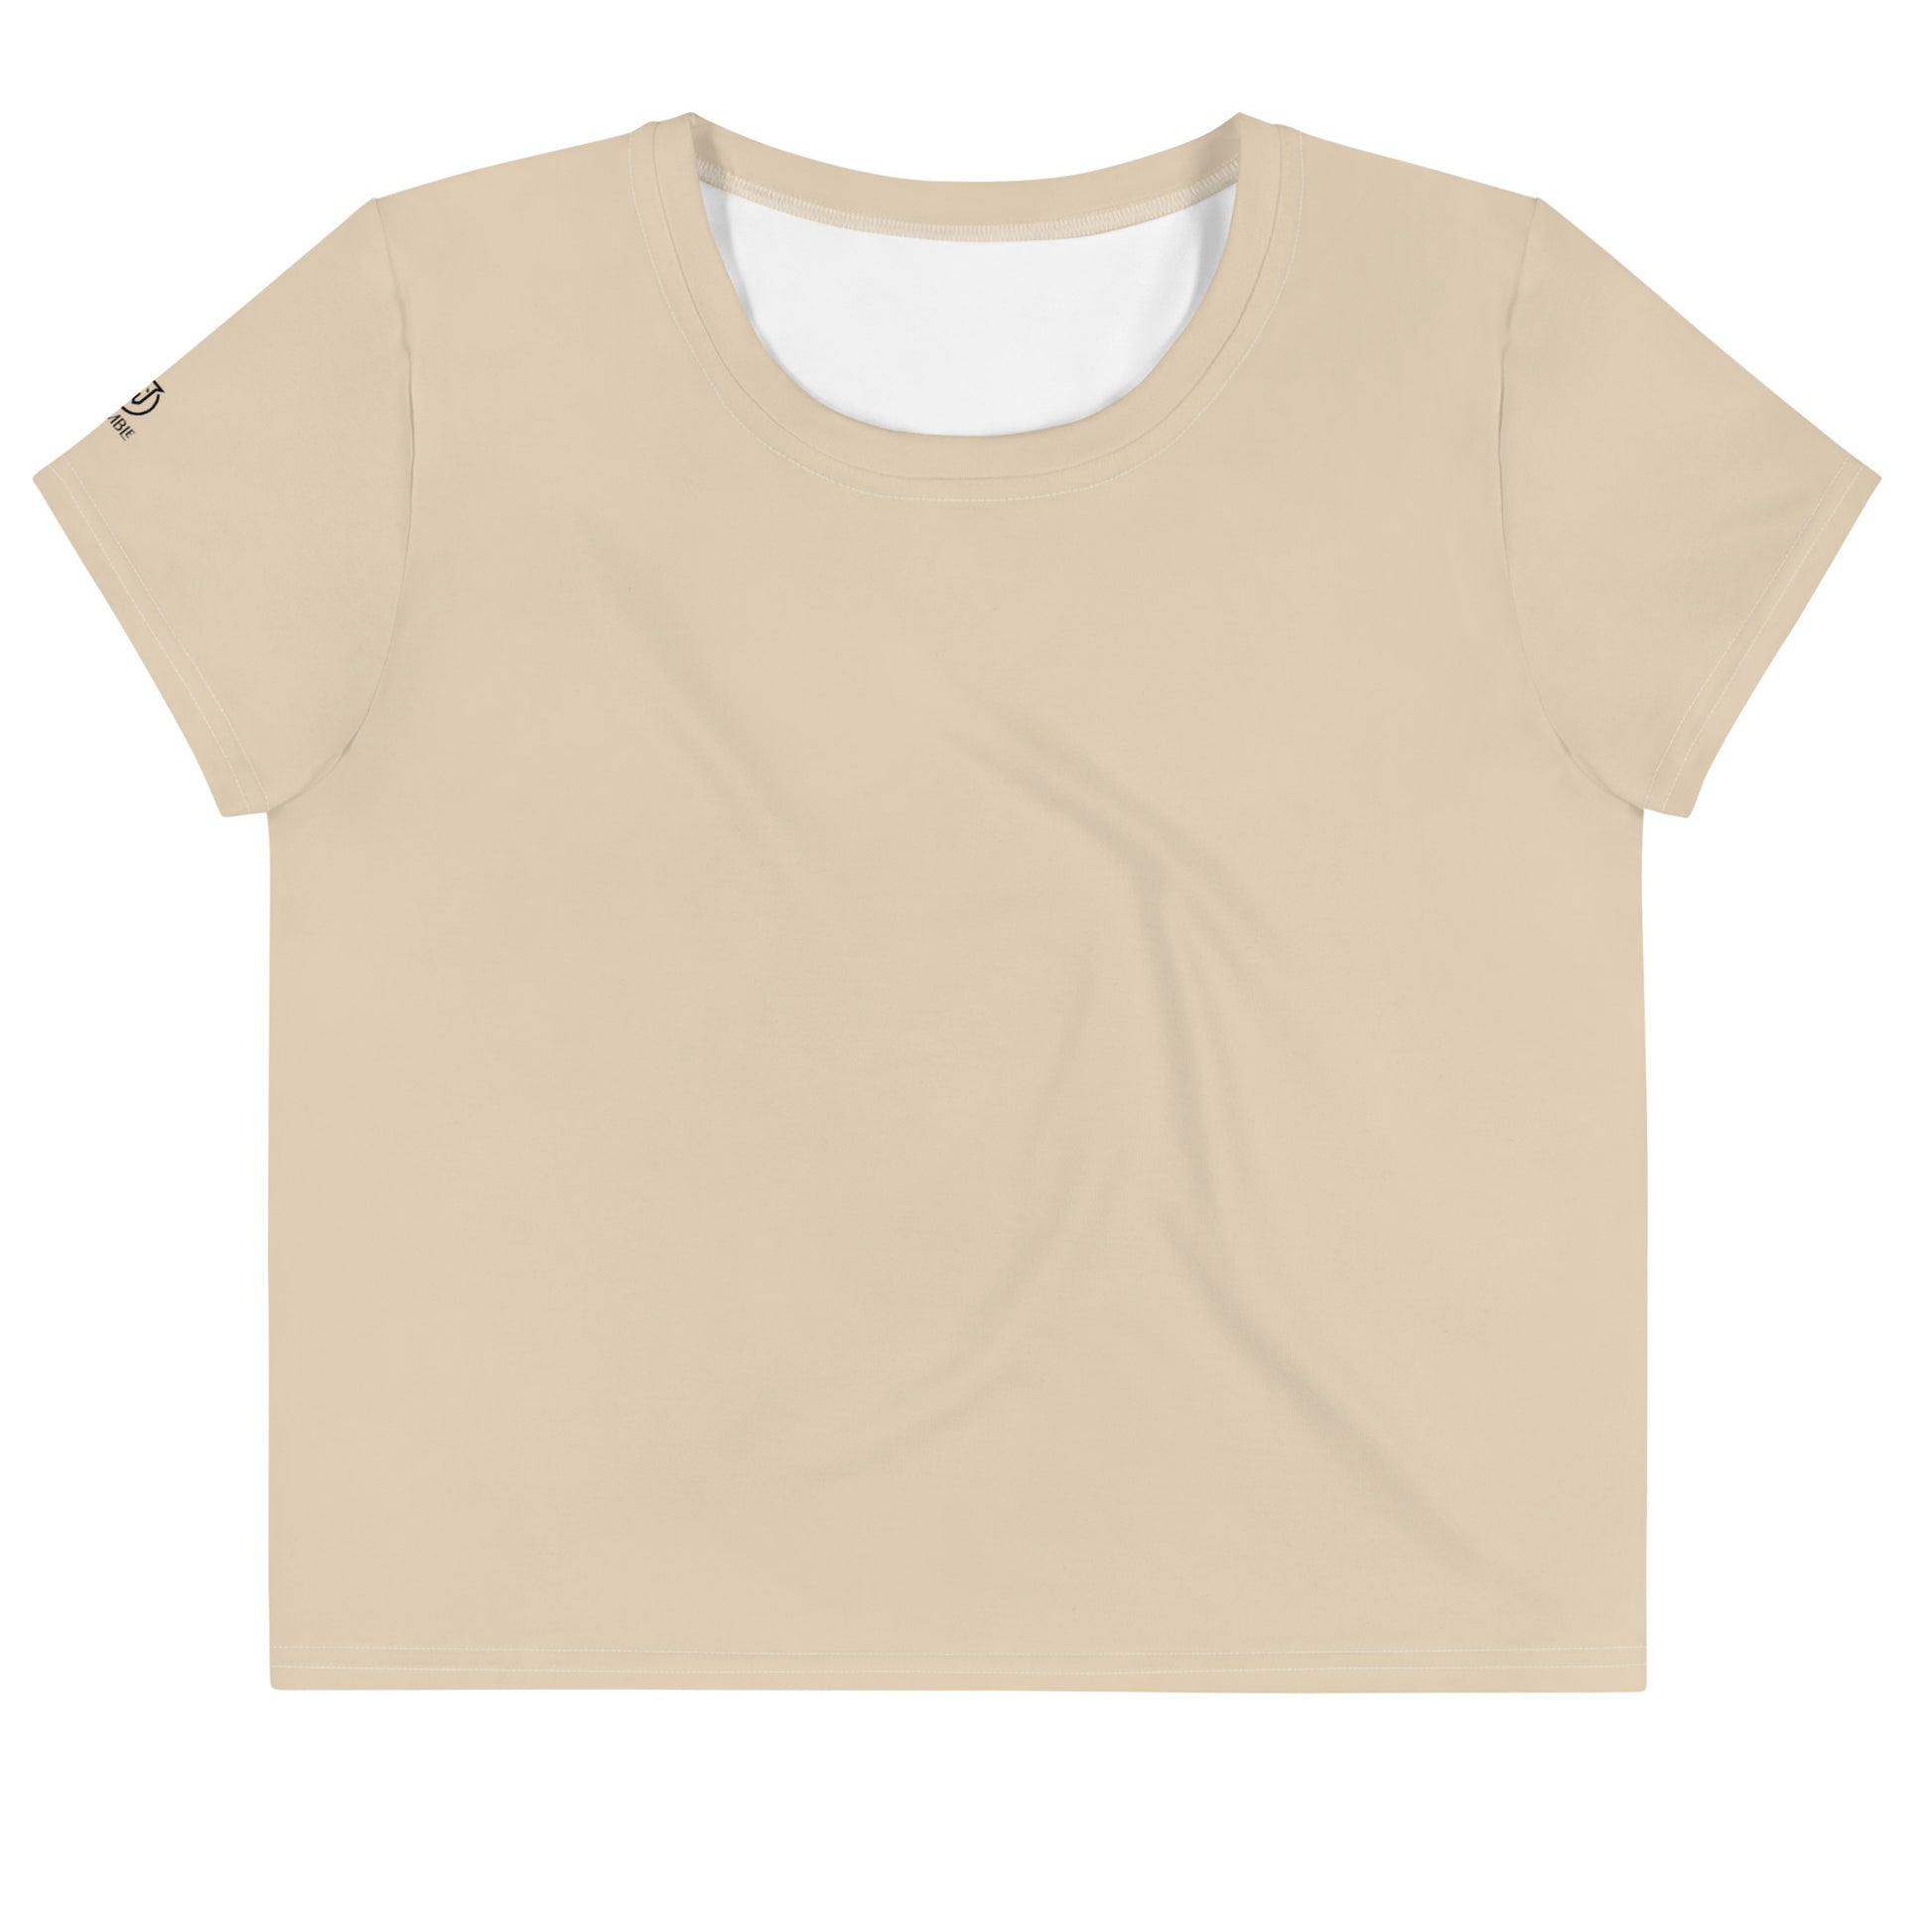 Humble Sportswear, women's color match neutral brown crop t-shirt 